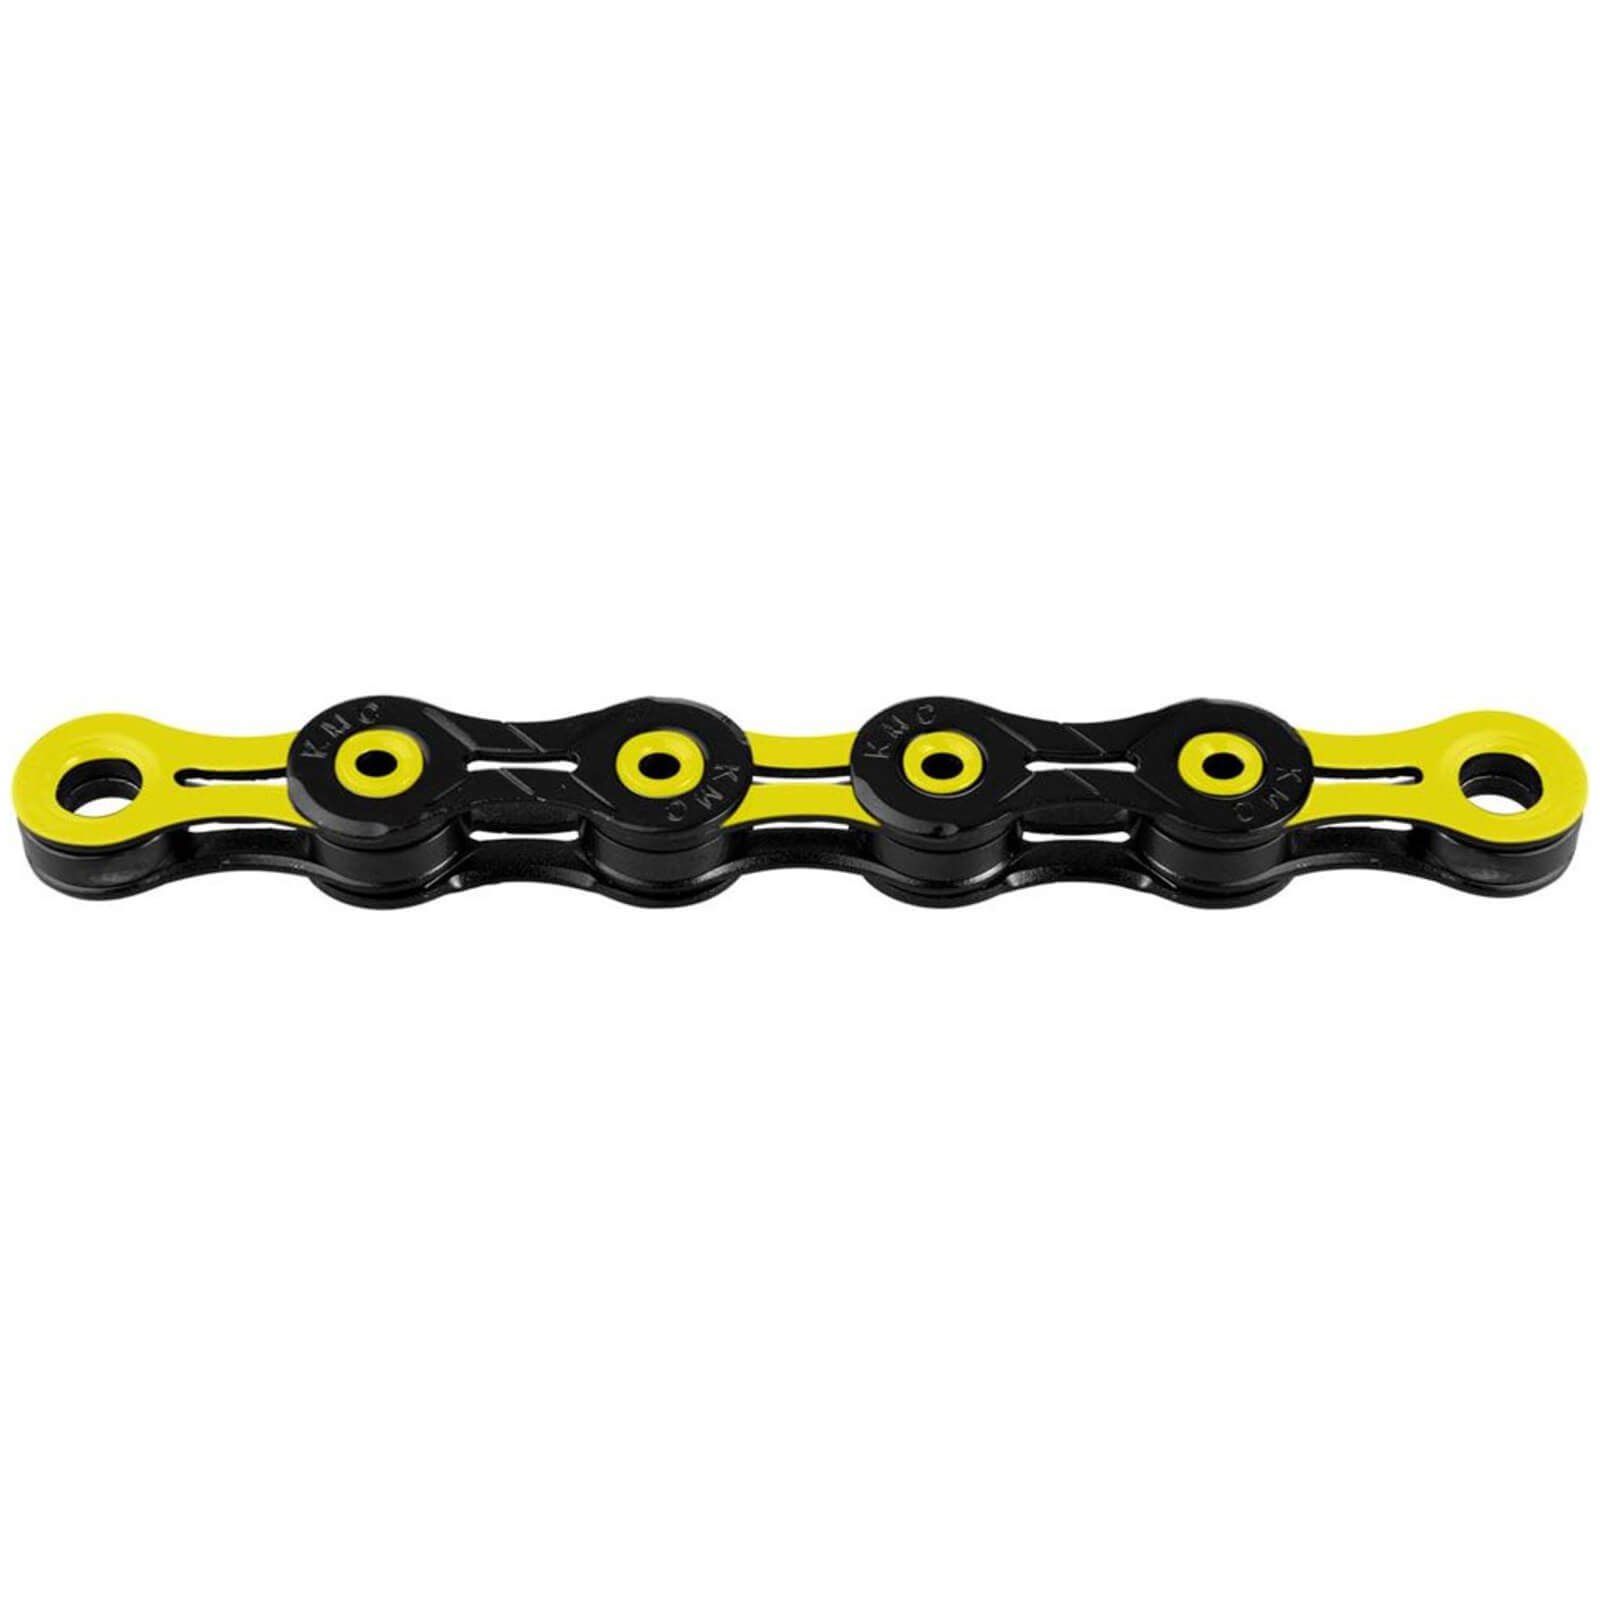 KMC DLC 11 Speed Chain - 116 Links - Black/Yellow